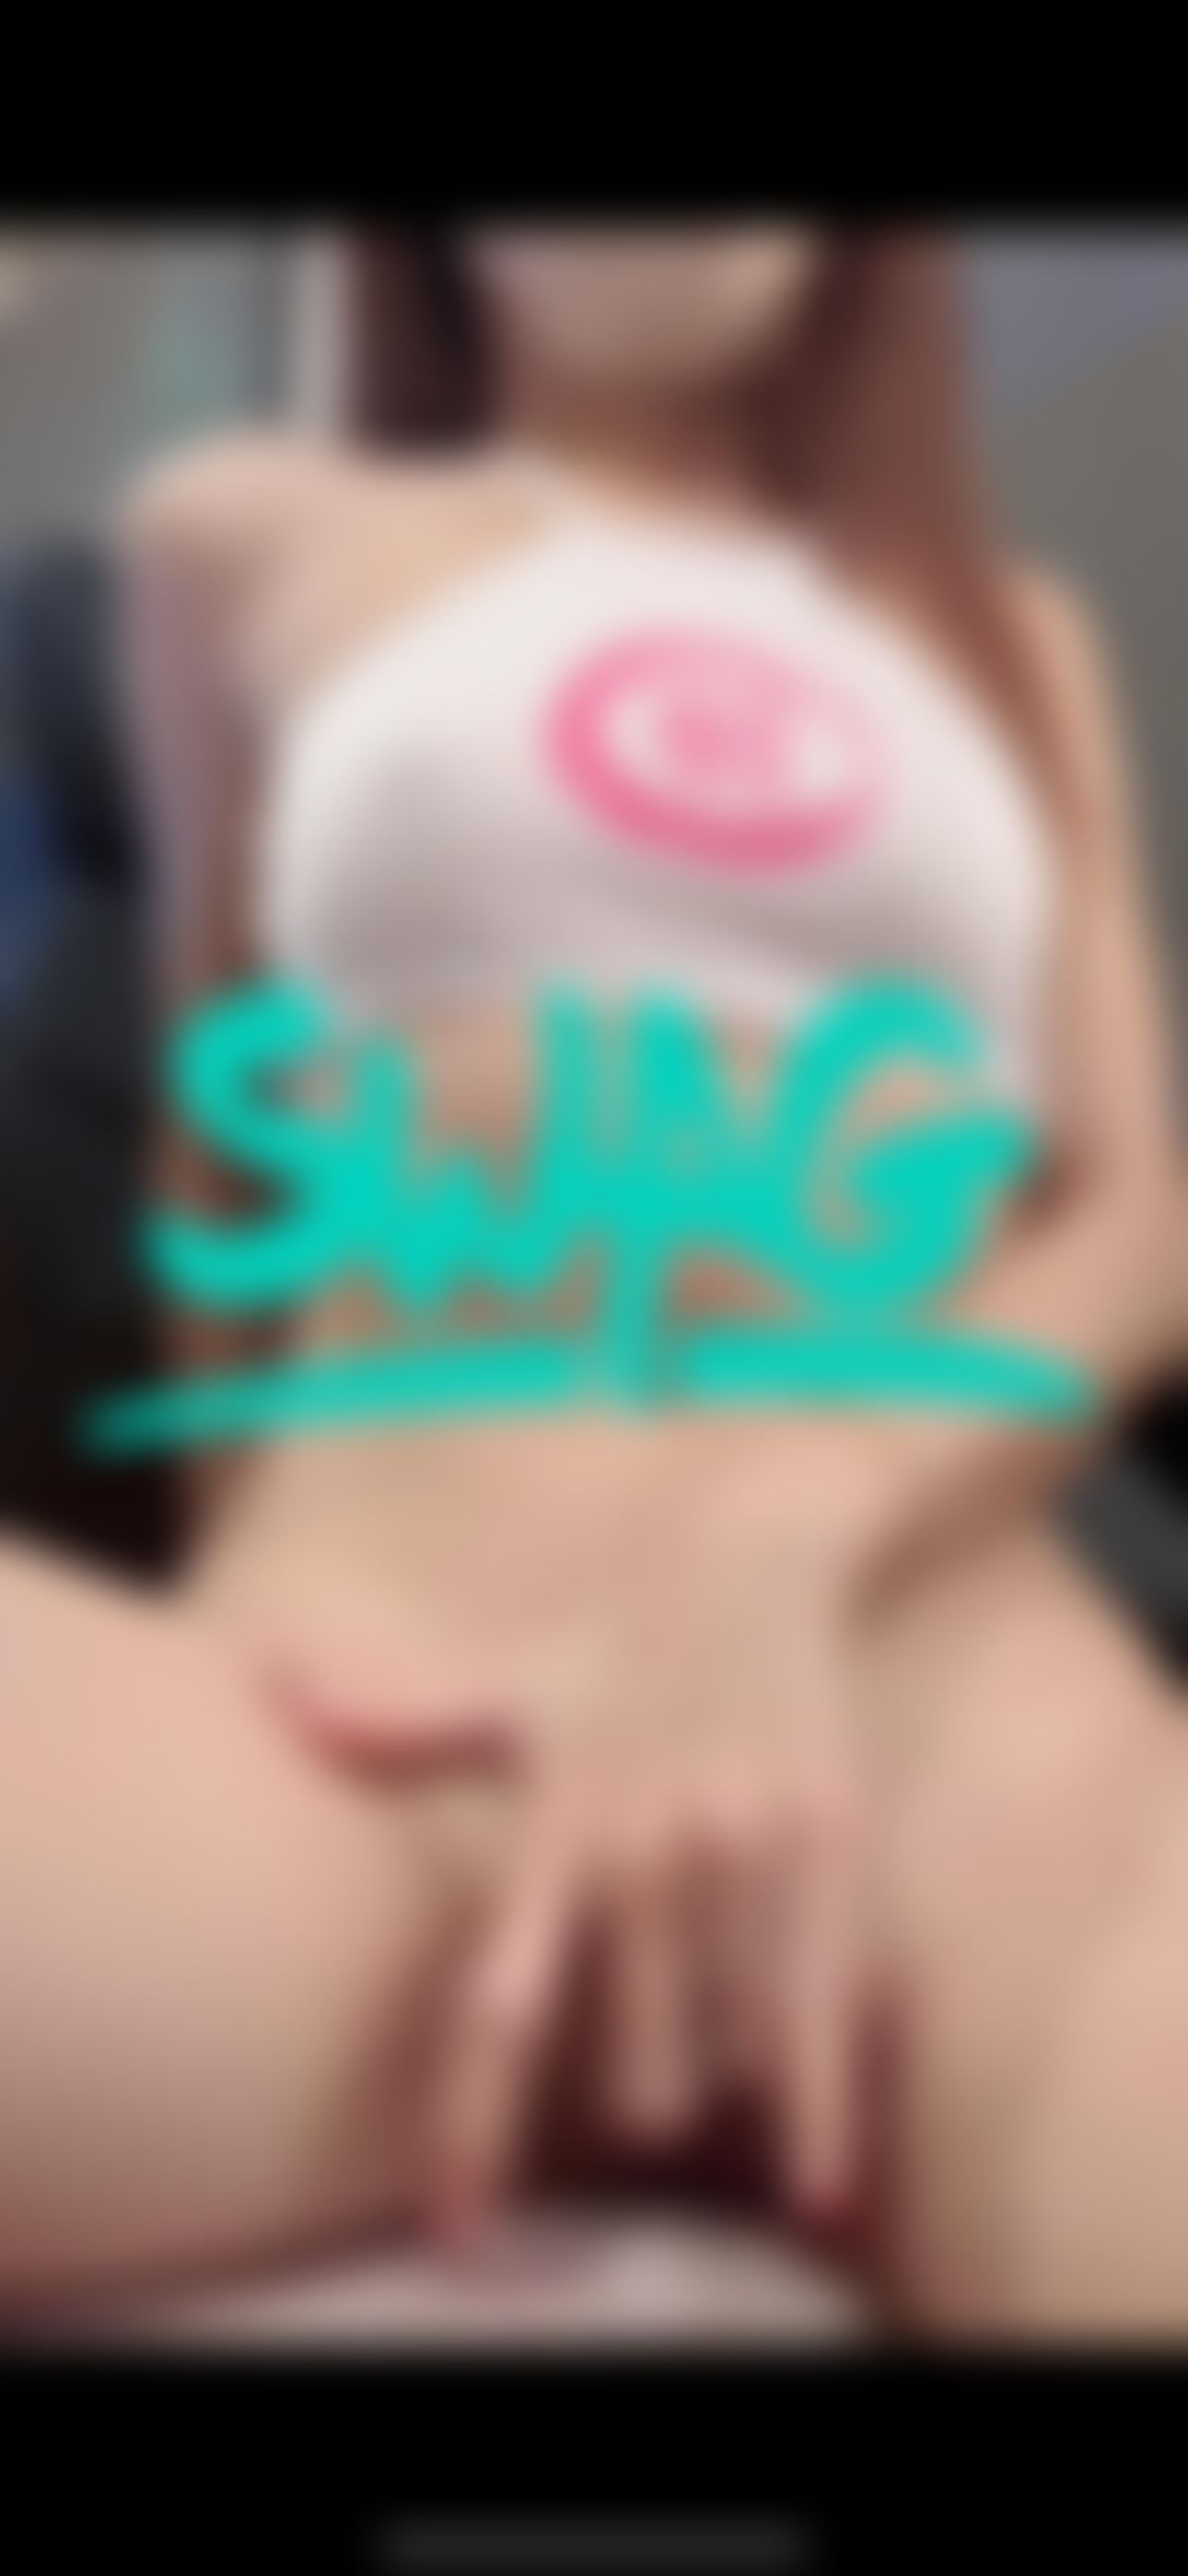 liyangg : Baby can you hard massage my boobs and suck nipple pls  🫦